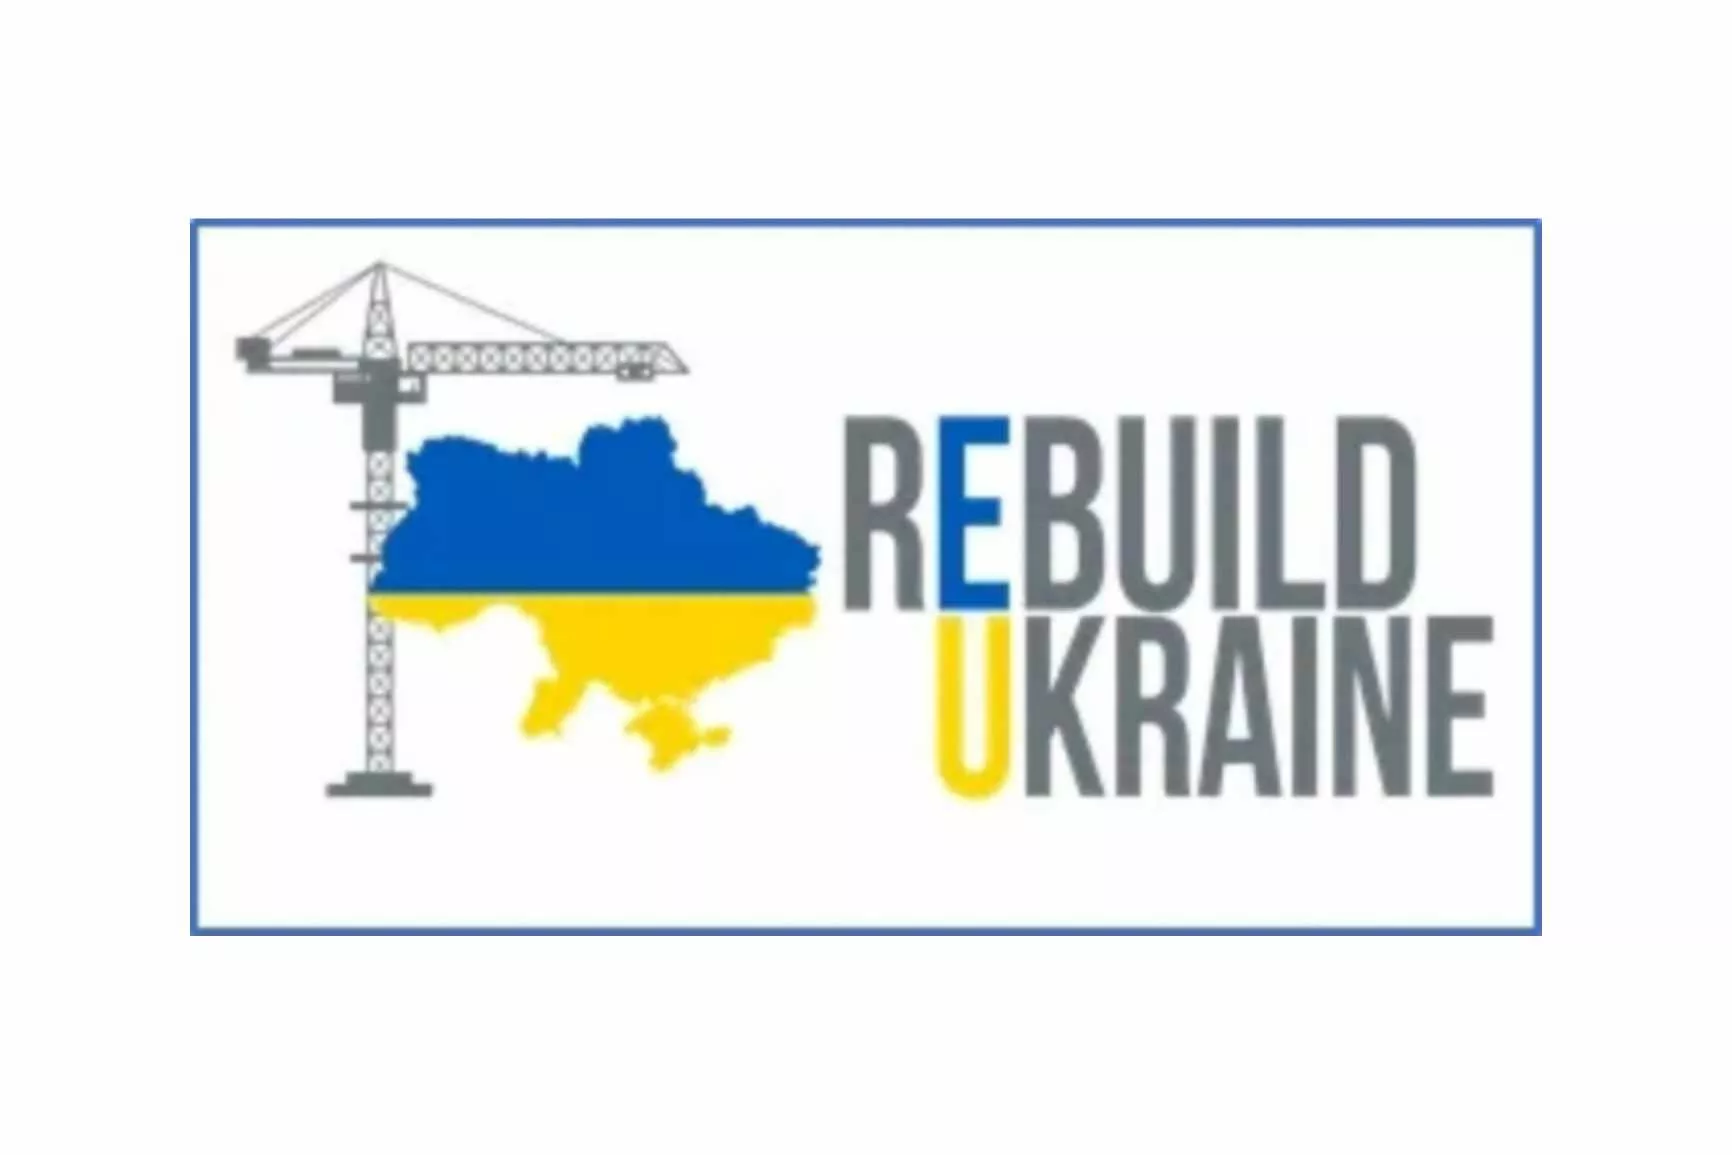 Nearly 1900 people want to help rebuild Ukraine